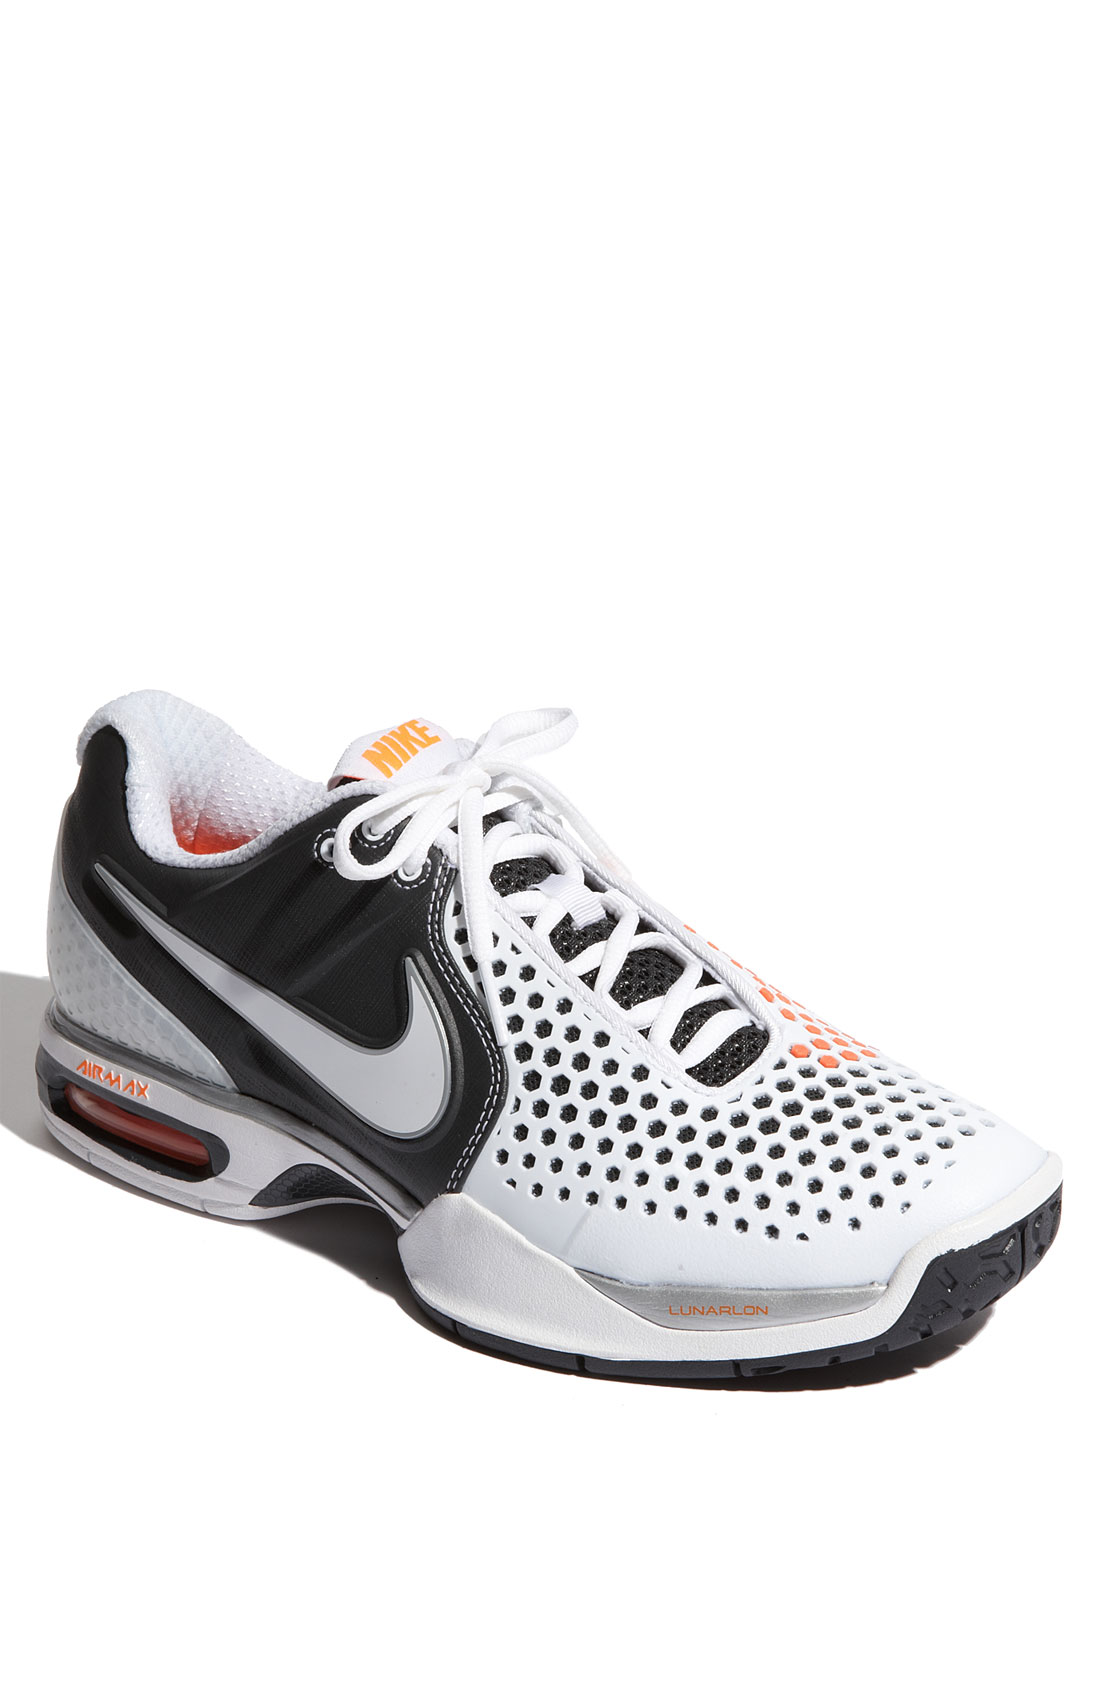 nike-white-orange-air-max-court-ballistic-33-tennis-shoe-product-2-2354820-114011635.jpeg